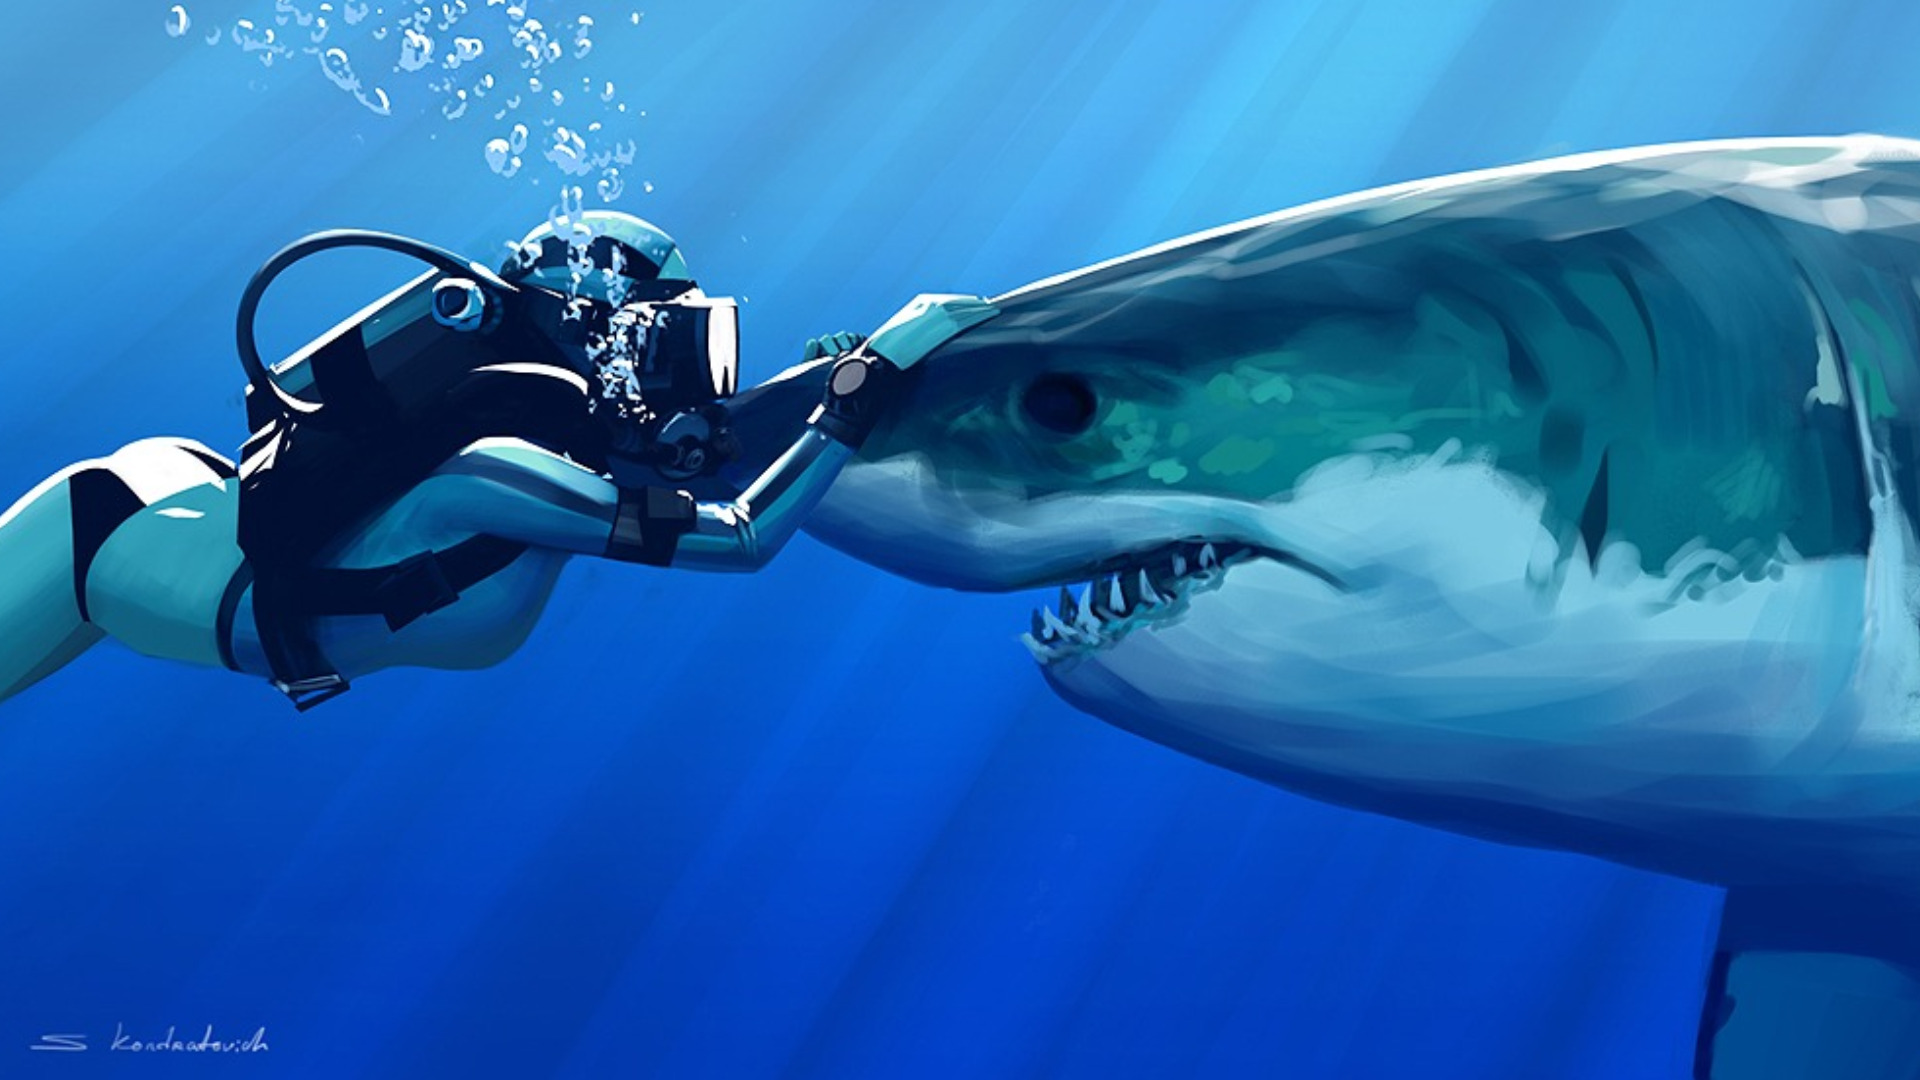 Whale Shark Desktop Wallpaper Backgrounds Free Download  Wallpapers13com